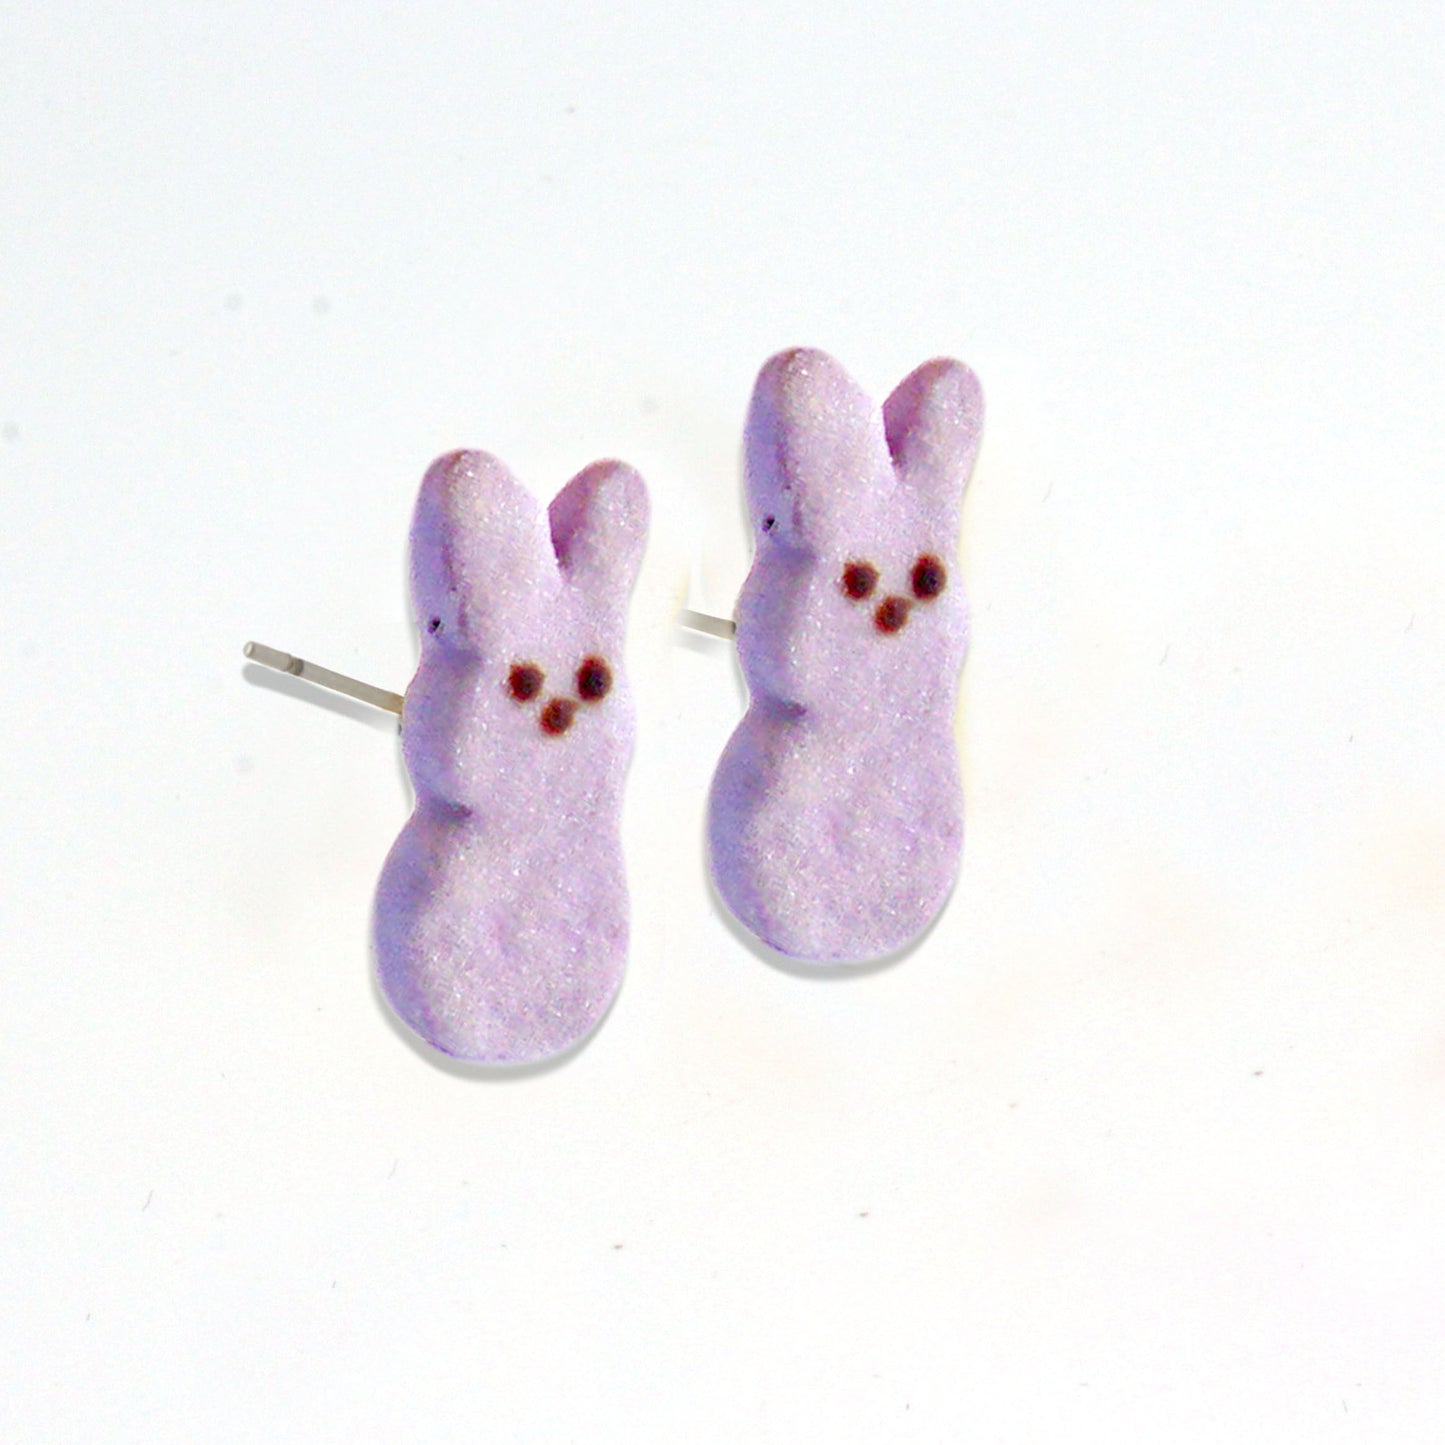 Marshmallow Bunny Stud Earrings - Hypoallergenic Steel - Fatally Feminine Designs